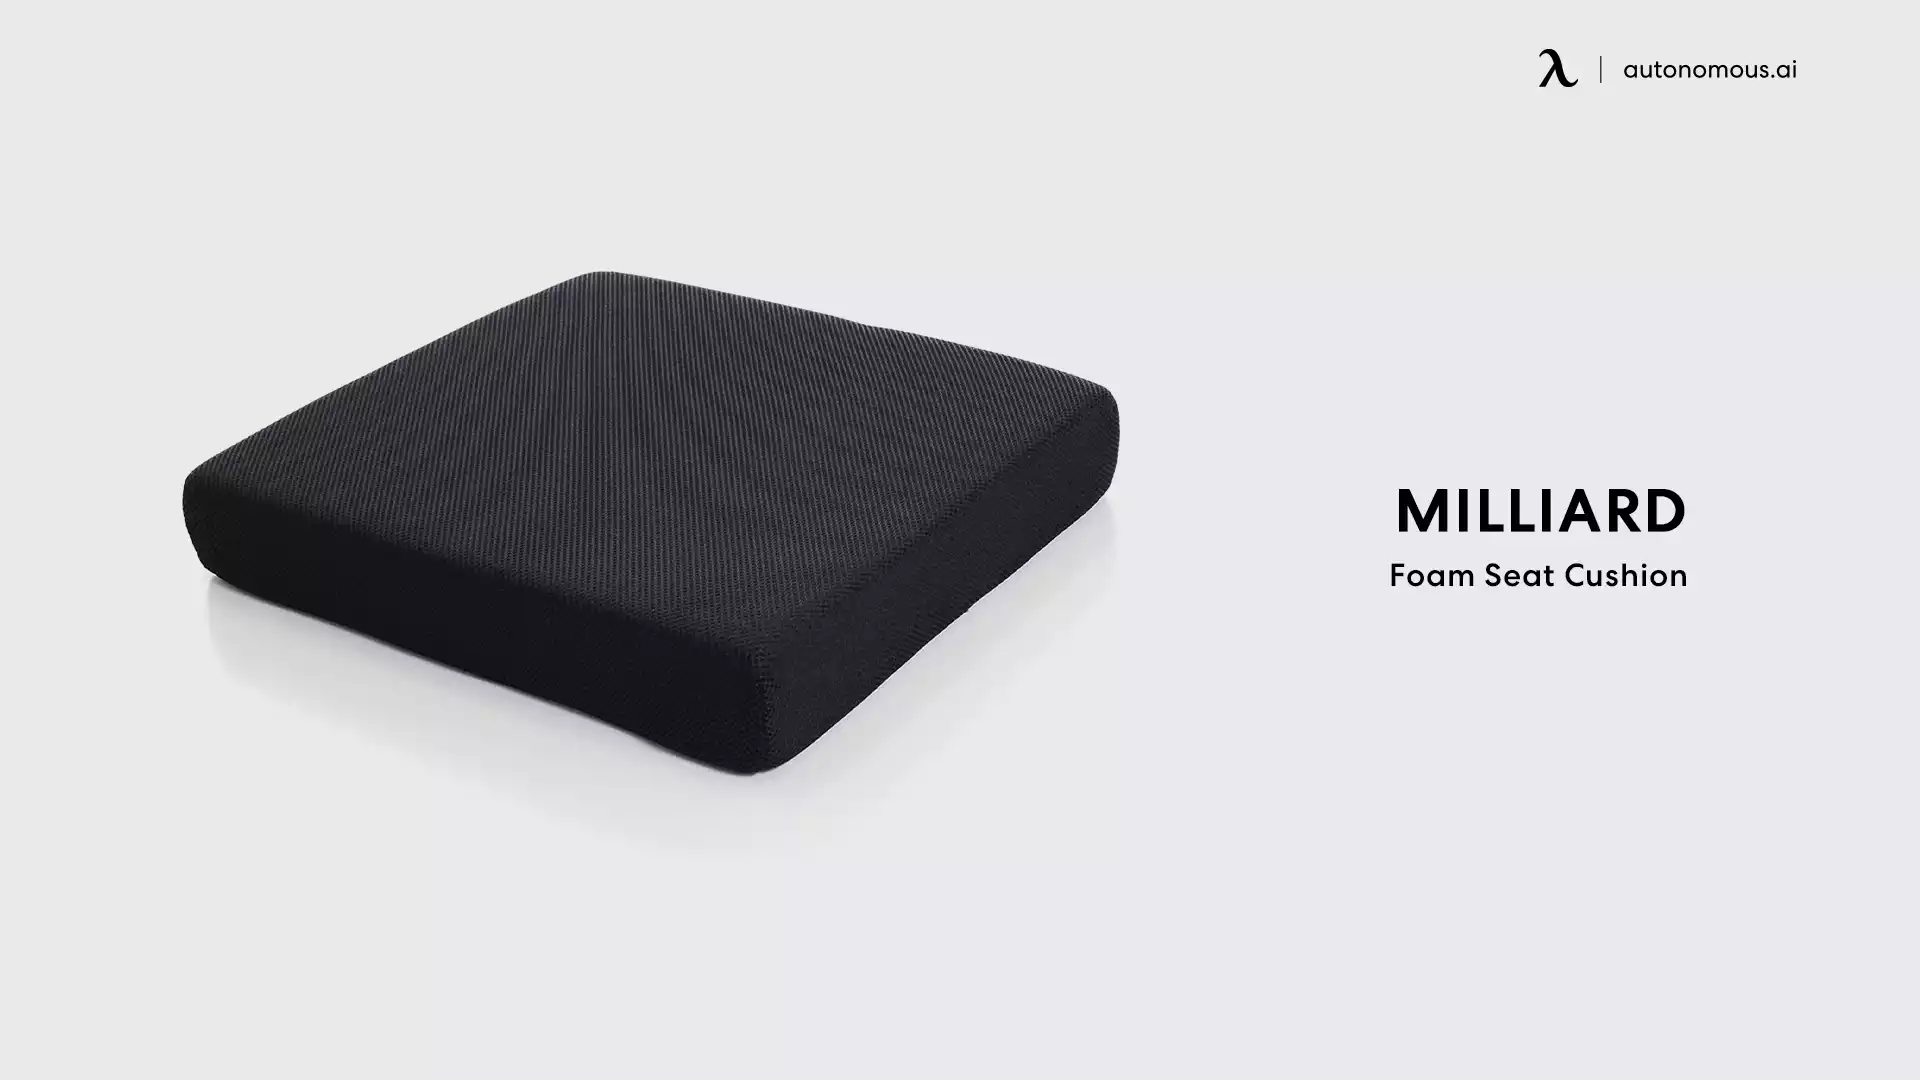 Foam Seat Cushion from Milliard